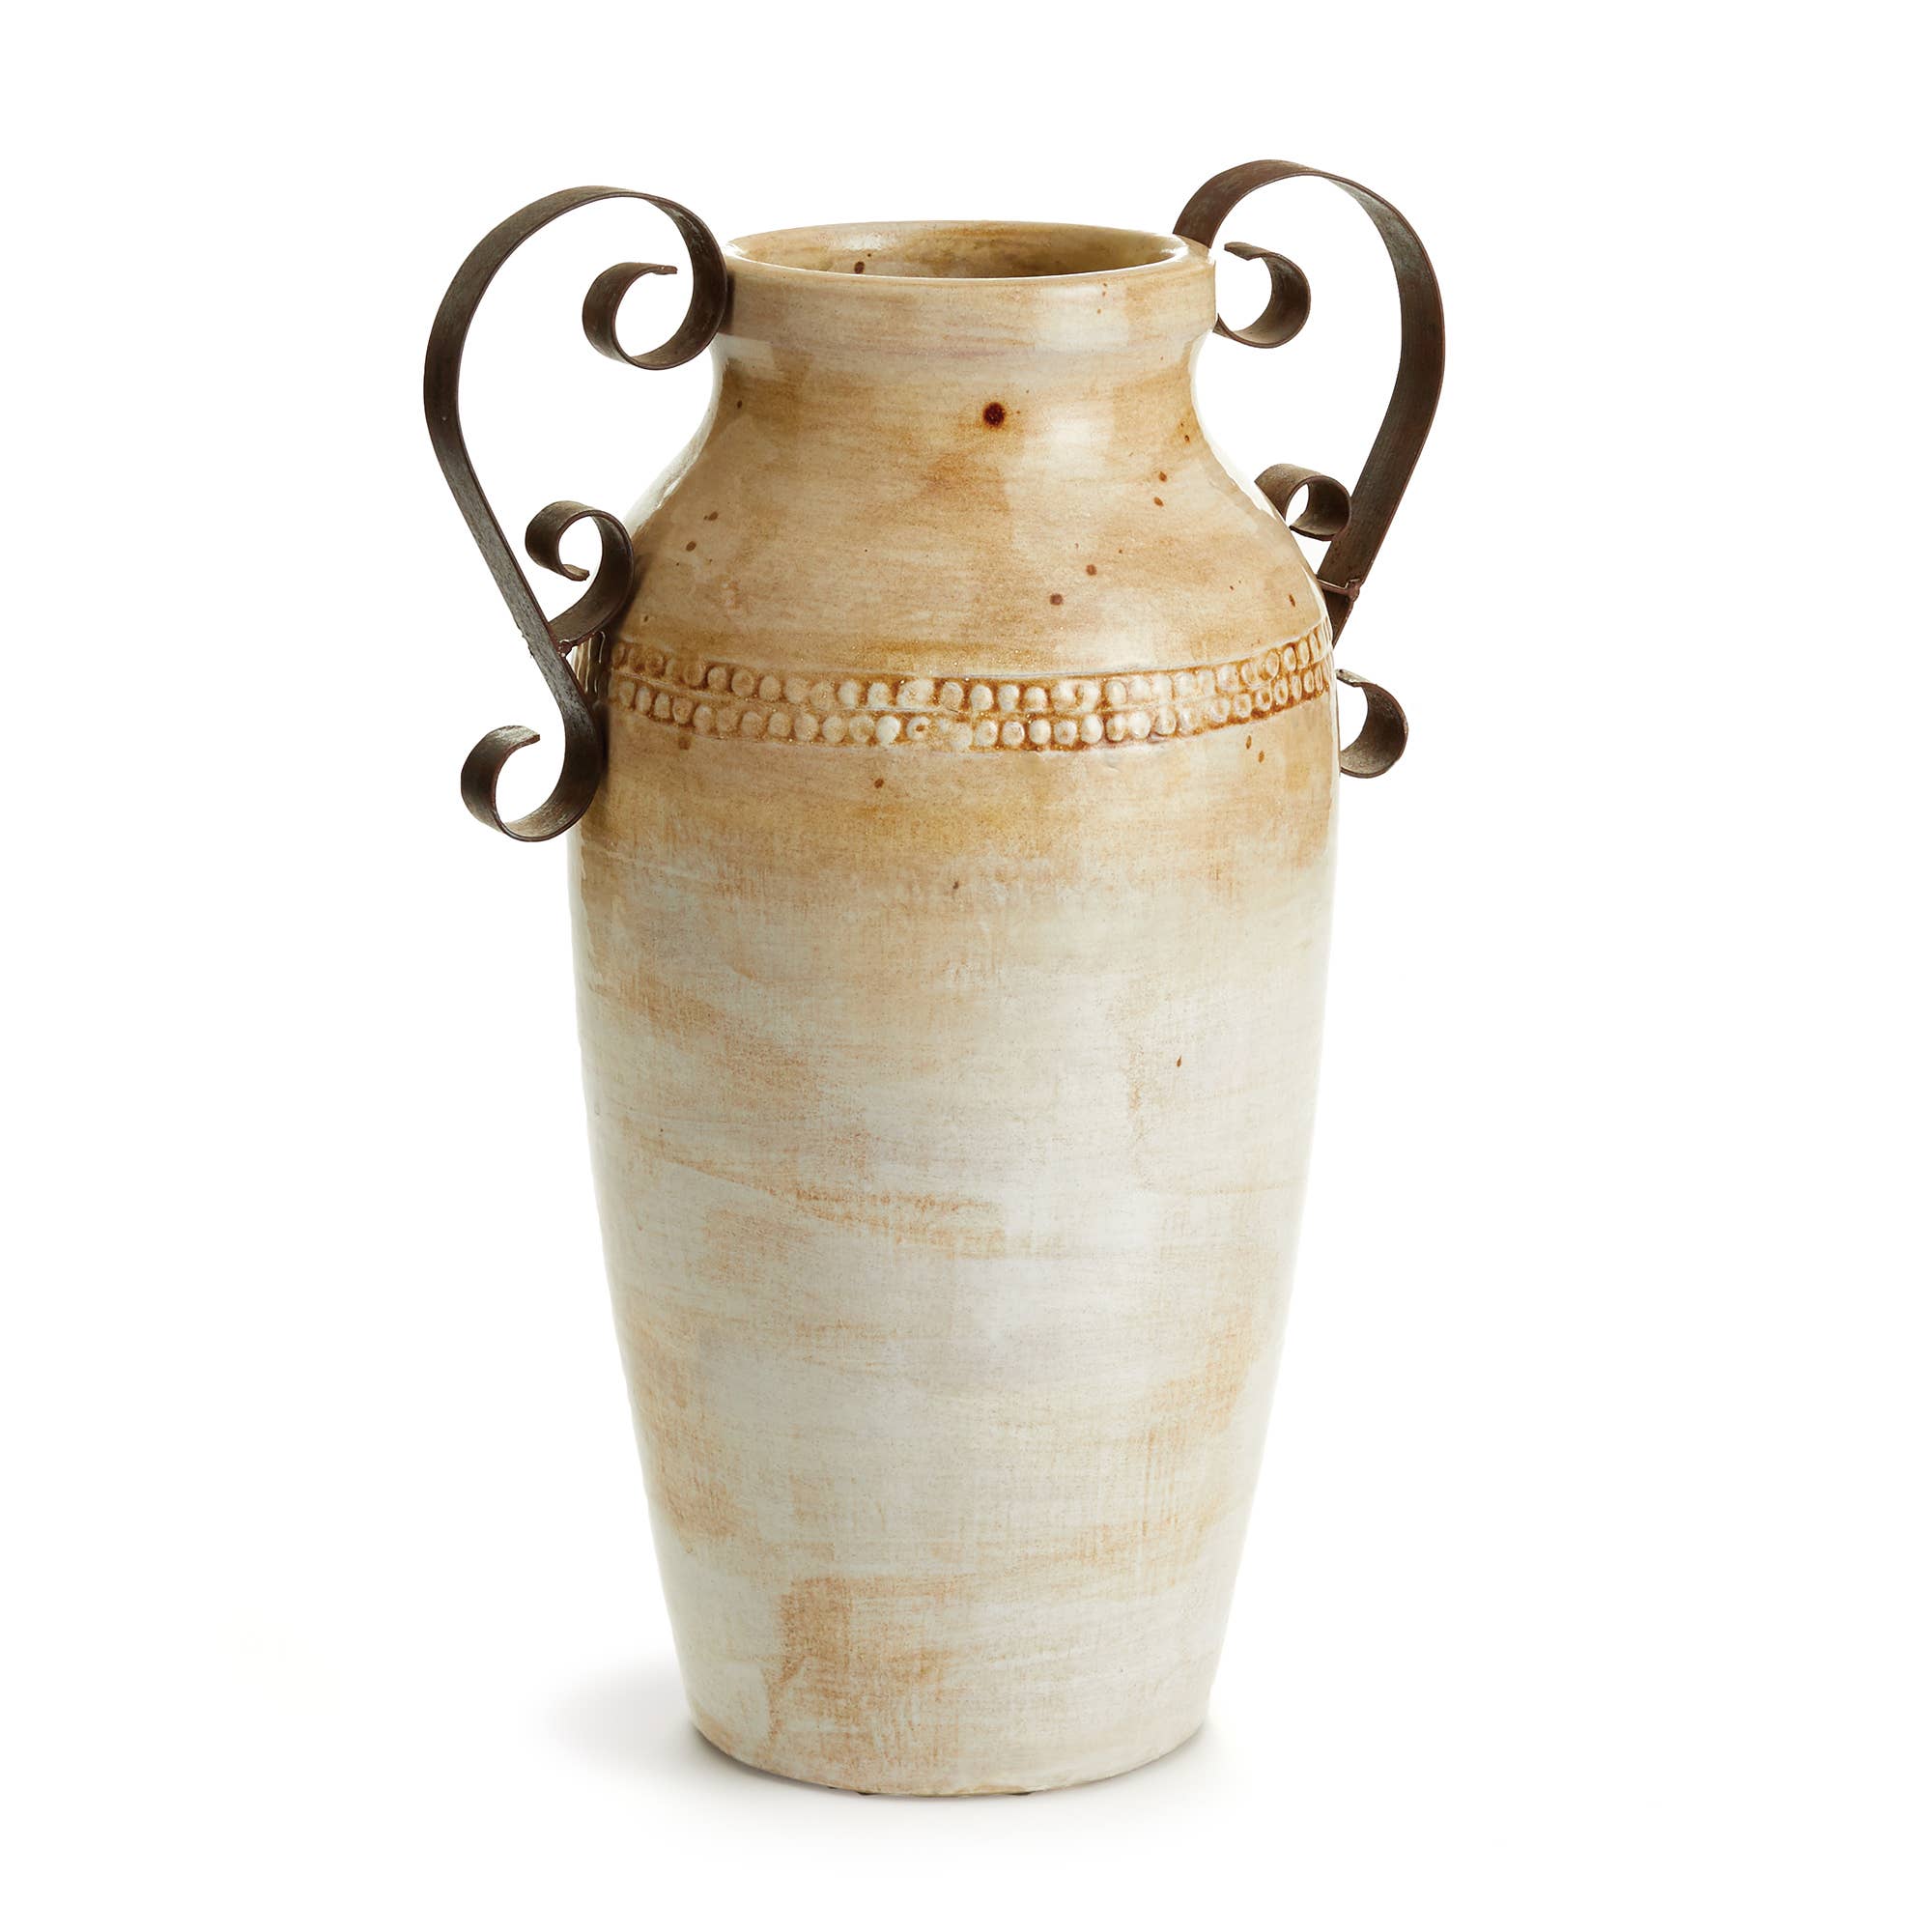 Napa Decorative Ceramics Collection-Ottora Vase with Handles 